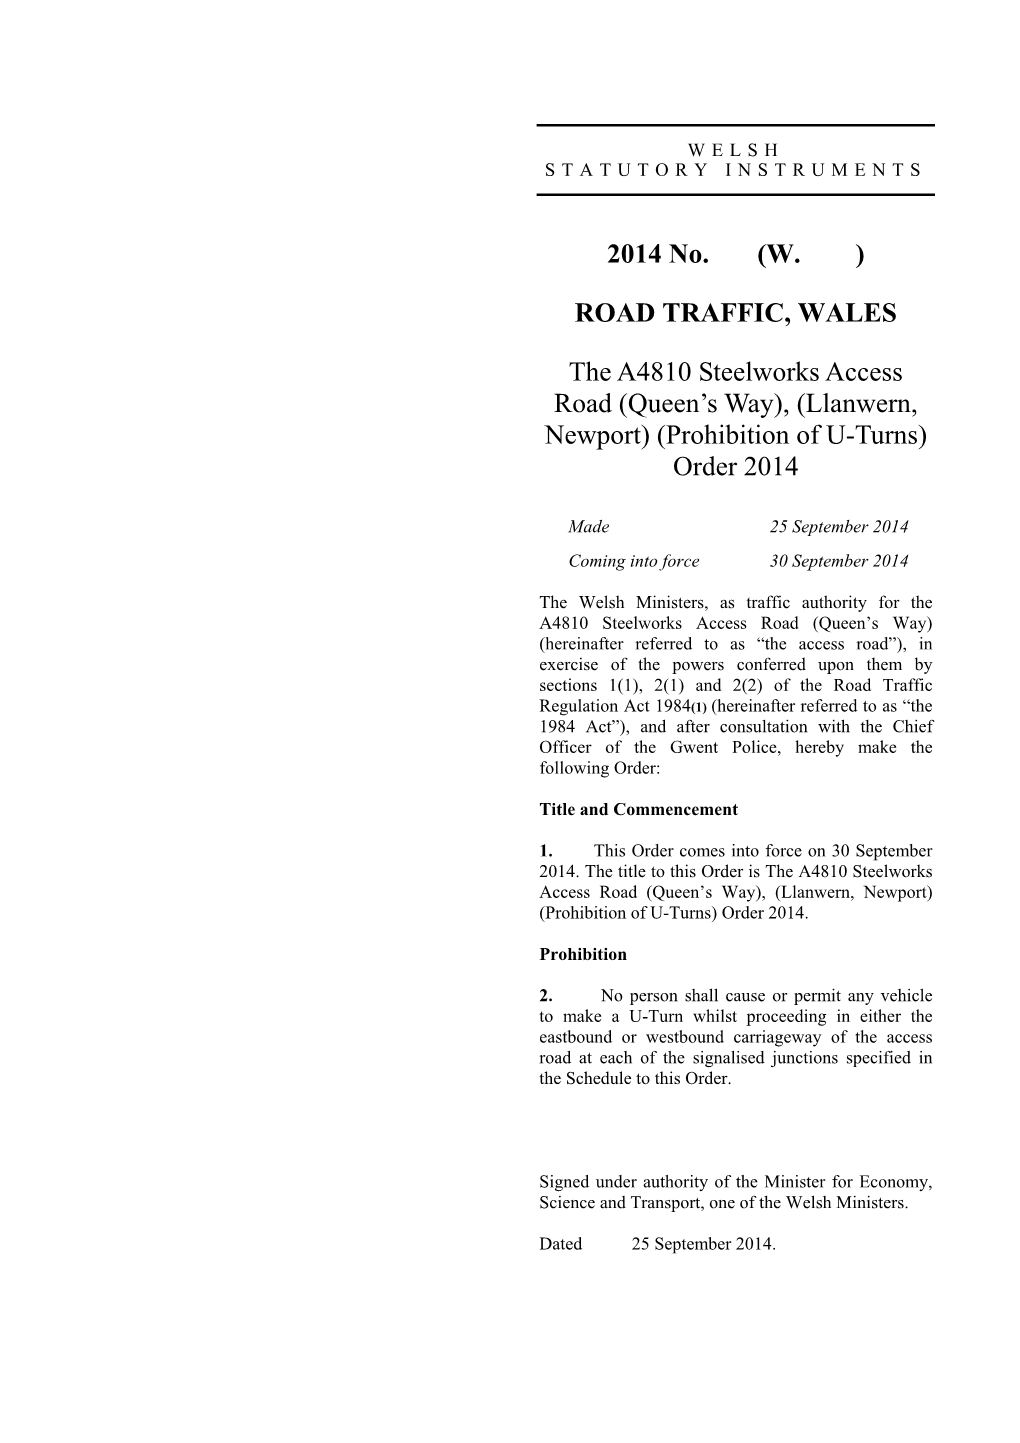 Llanwern, Newport) (Prohibition of U-Turns) Order 2014